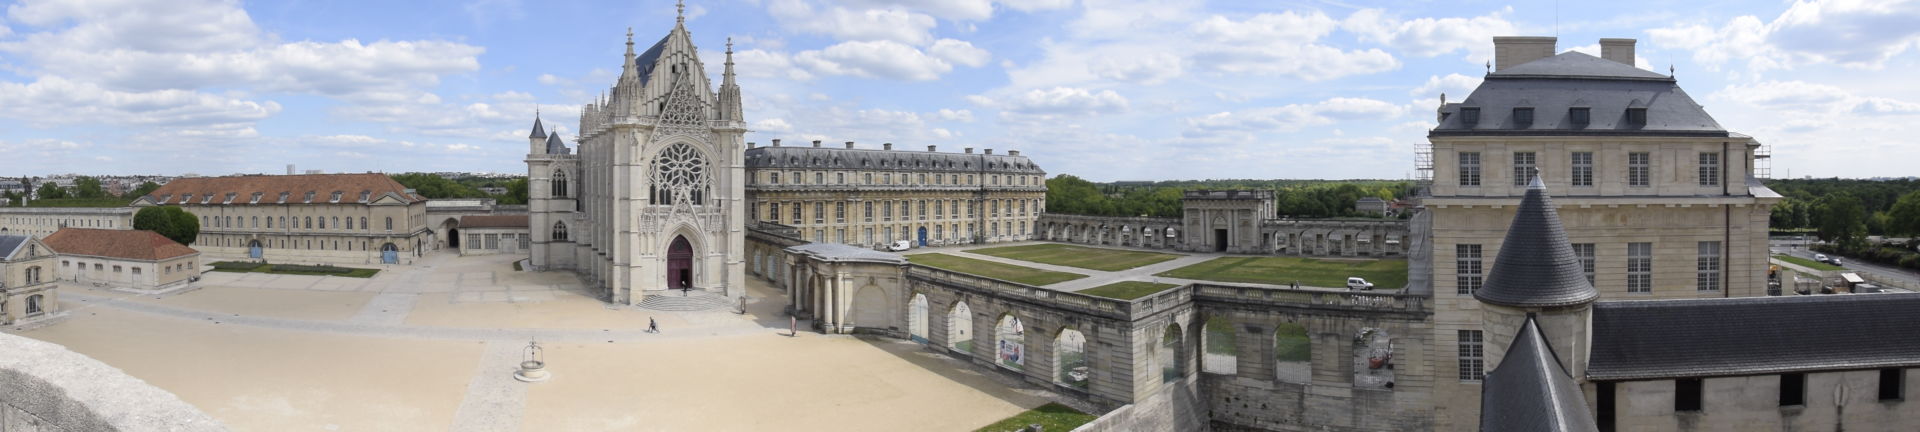 Vizita la Chateau de Vincennes, Paris, Franta